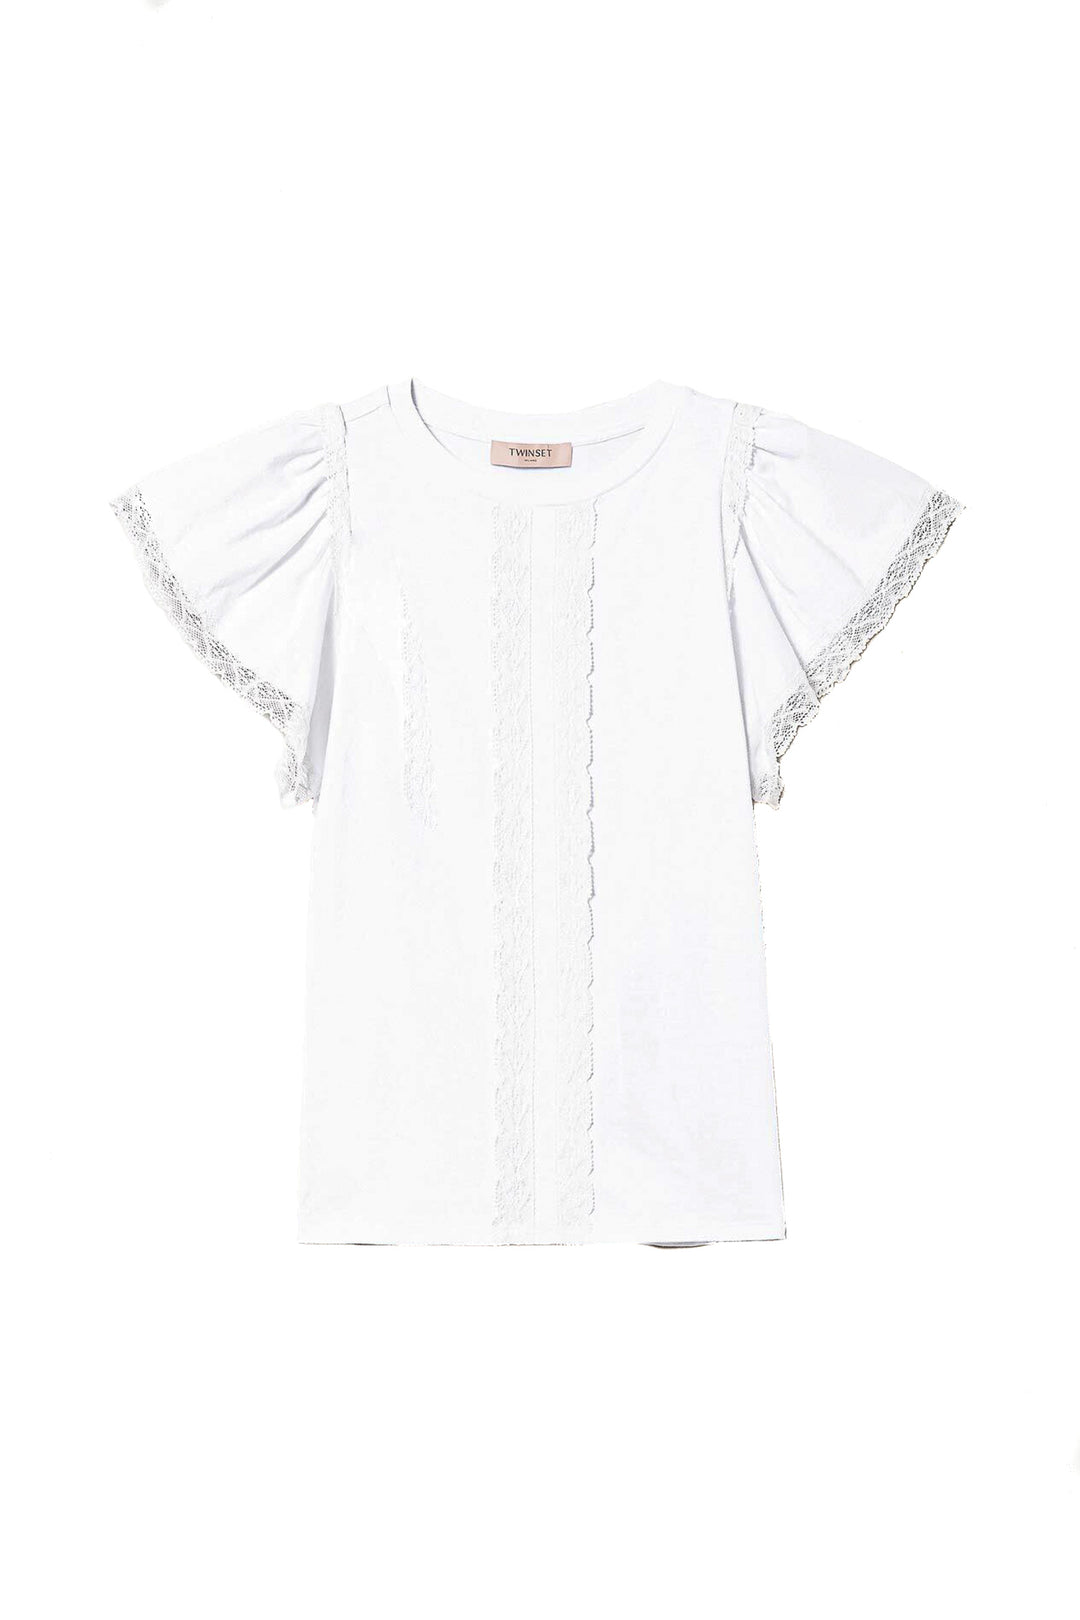 TWINSET T-shirt bianca in cotone con banda in pizzo - Mancinelli 1954